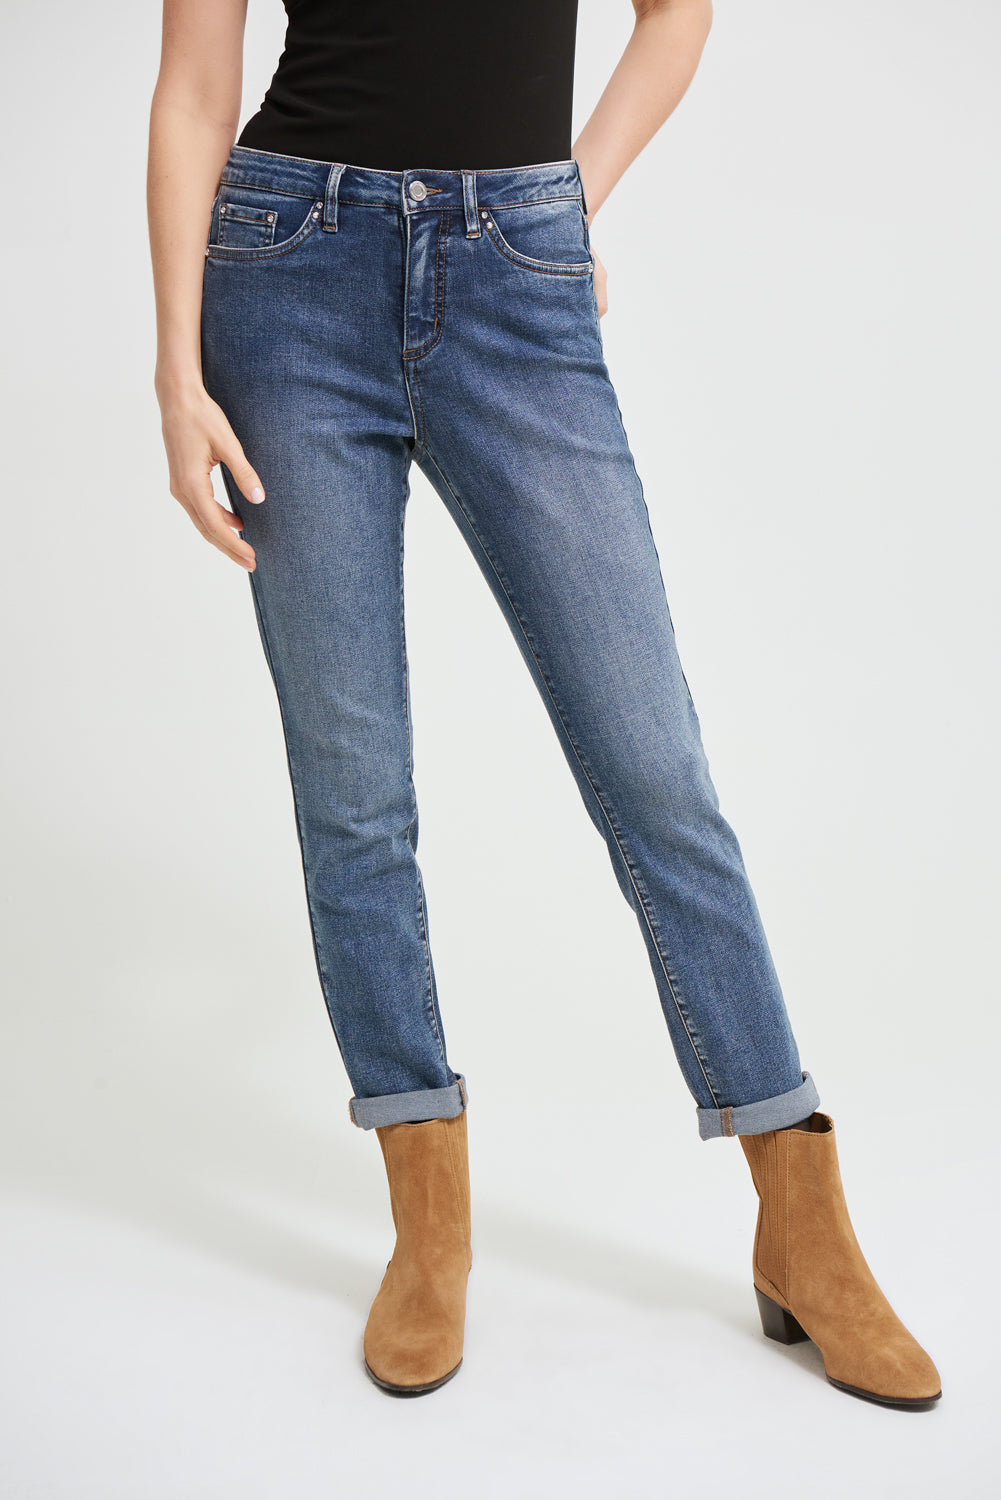 Joseph Ribkoff Denim Medium Blue Straight Leg Jeans Style 213942